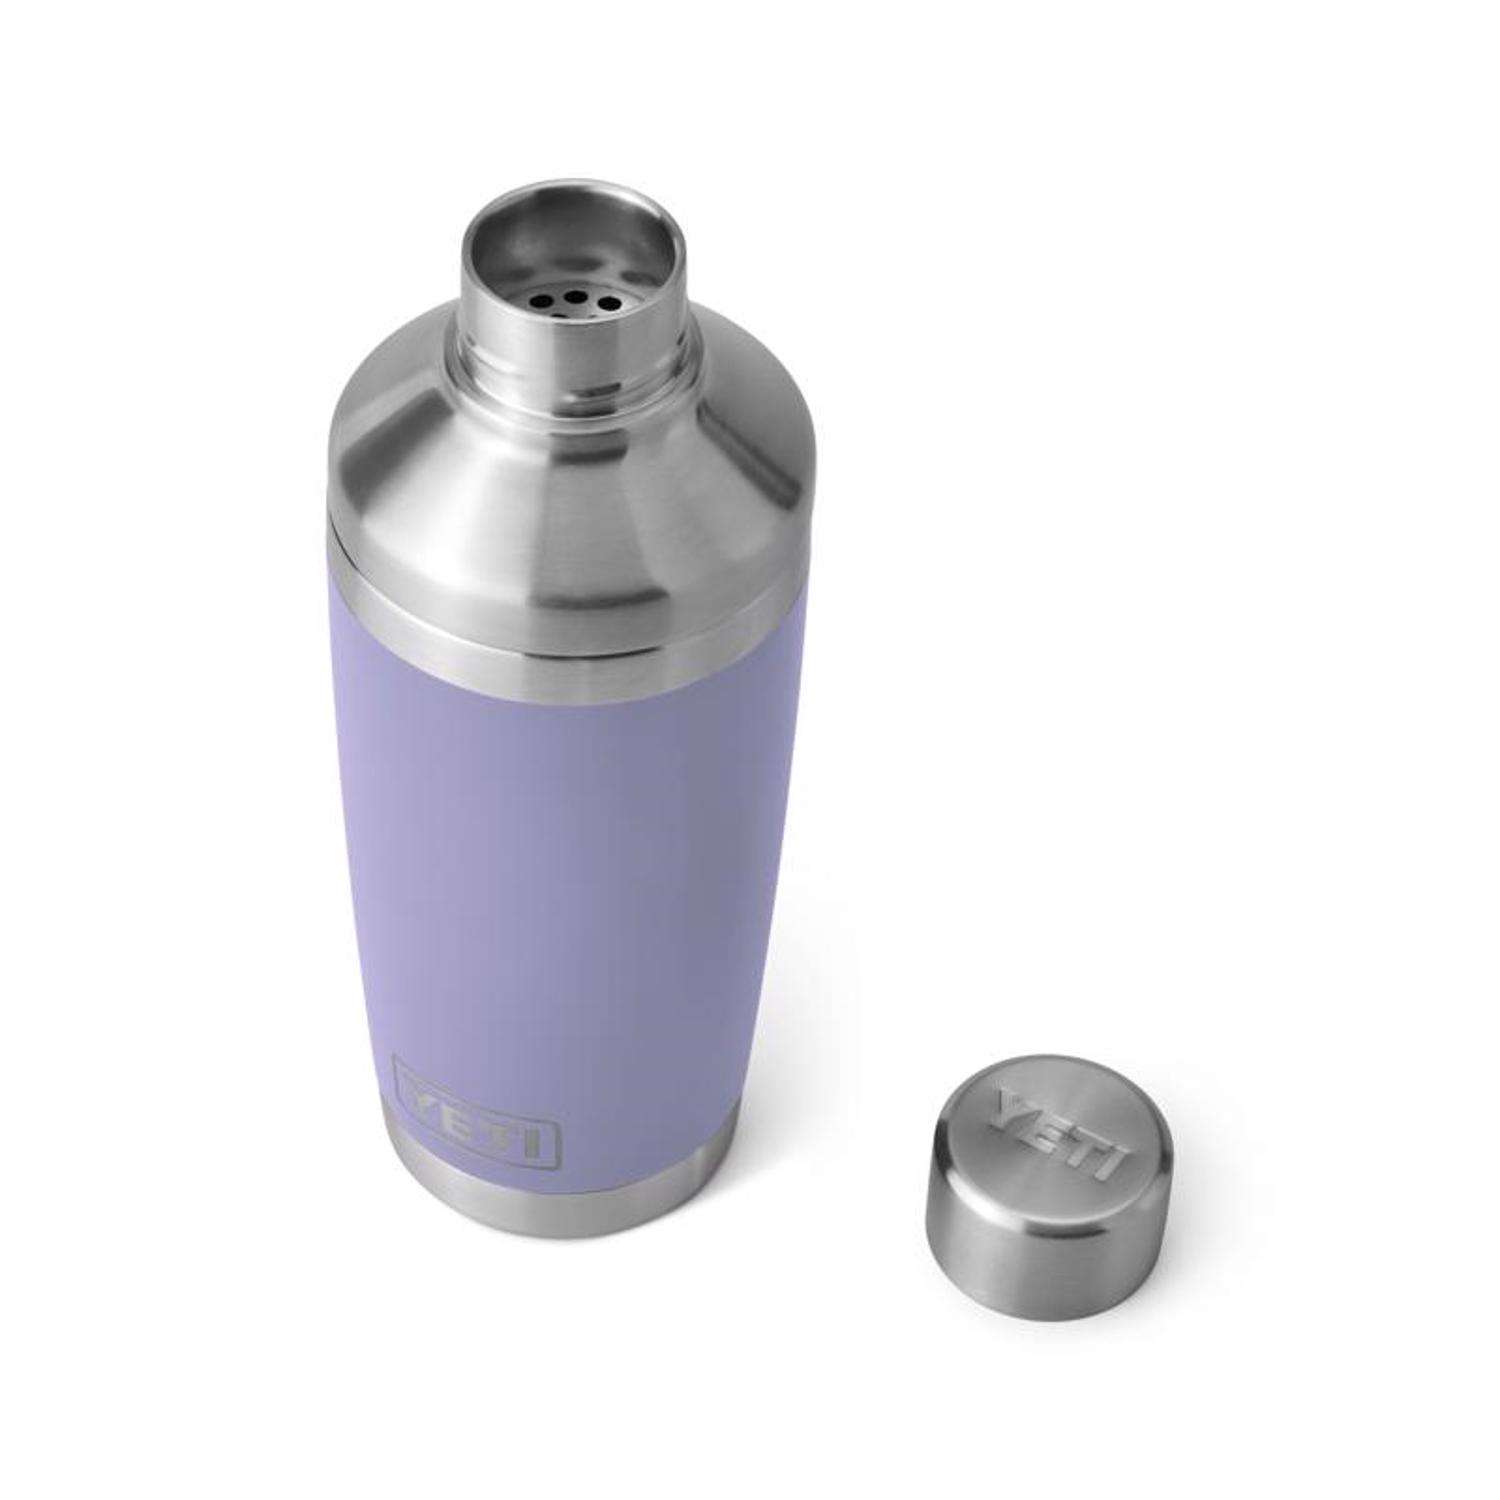 Yeti Rambler Cocktail Shaker - 20 oz - Cosmic Lilac